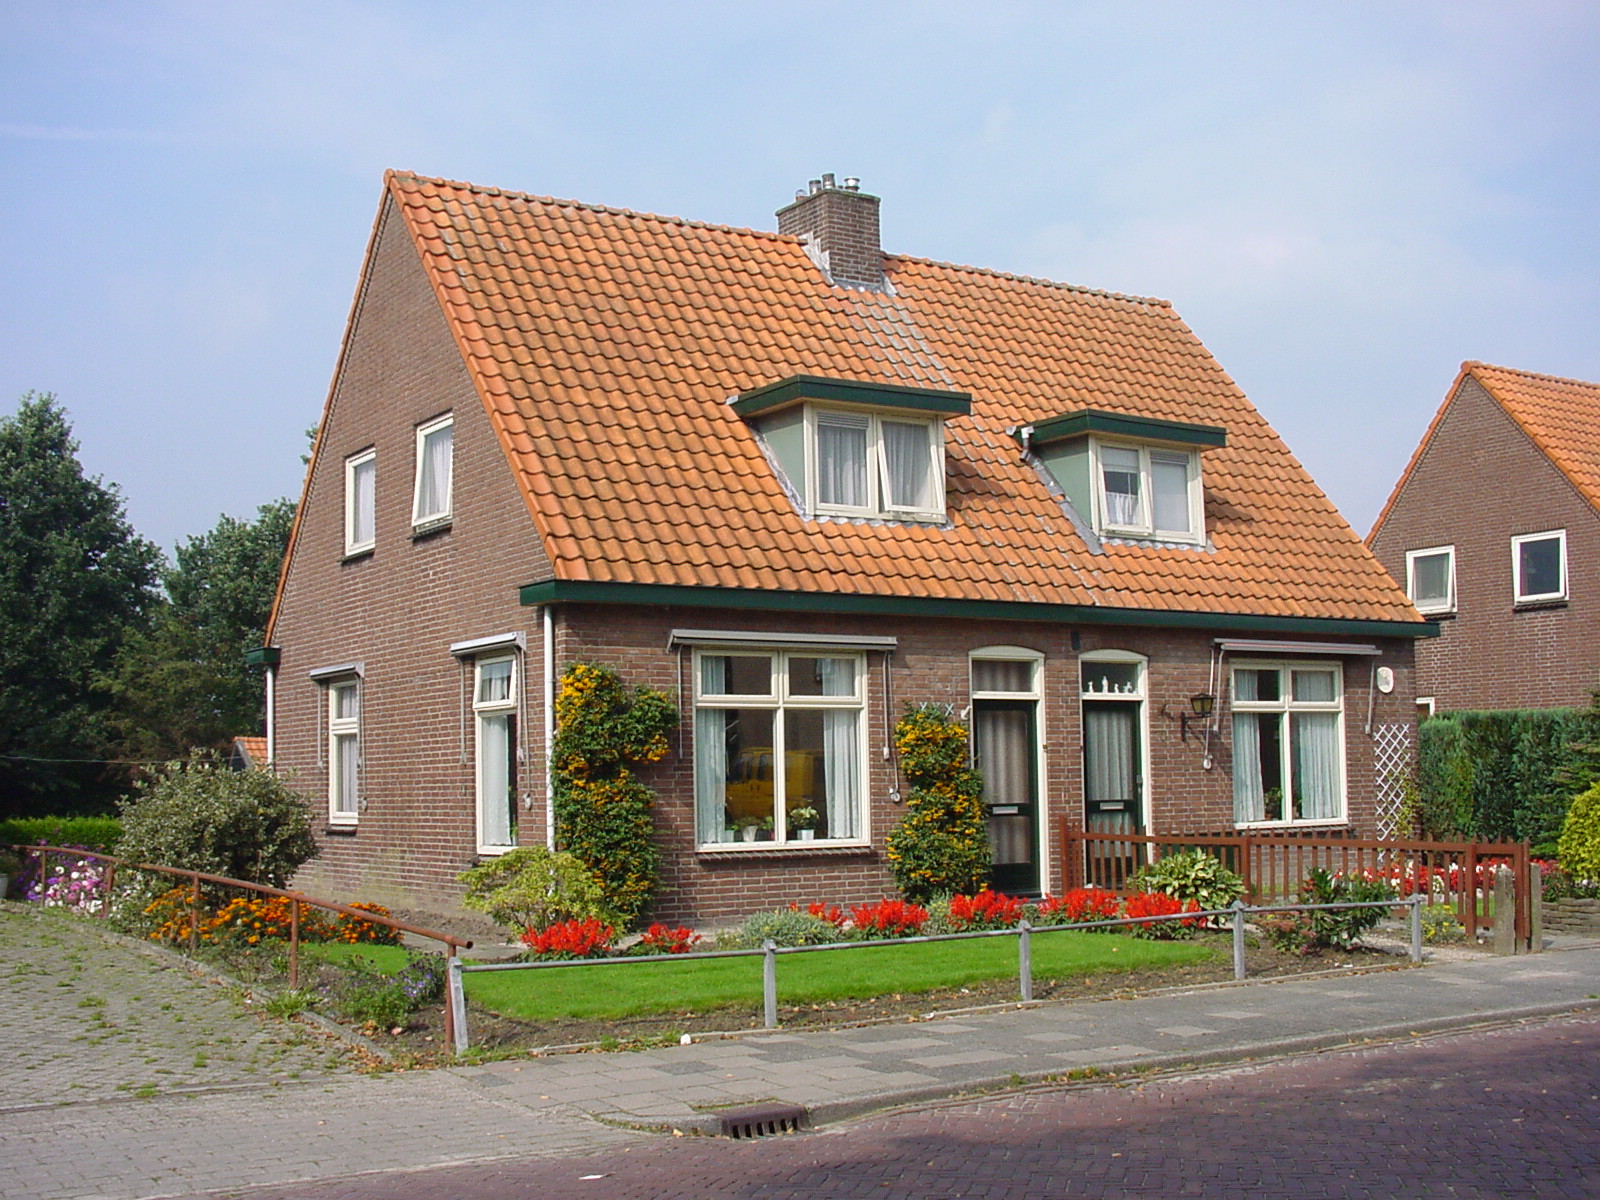 Ten Holtheweg 70, 8341 PH Steenwijkerwold, Nederland